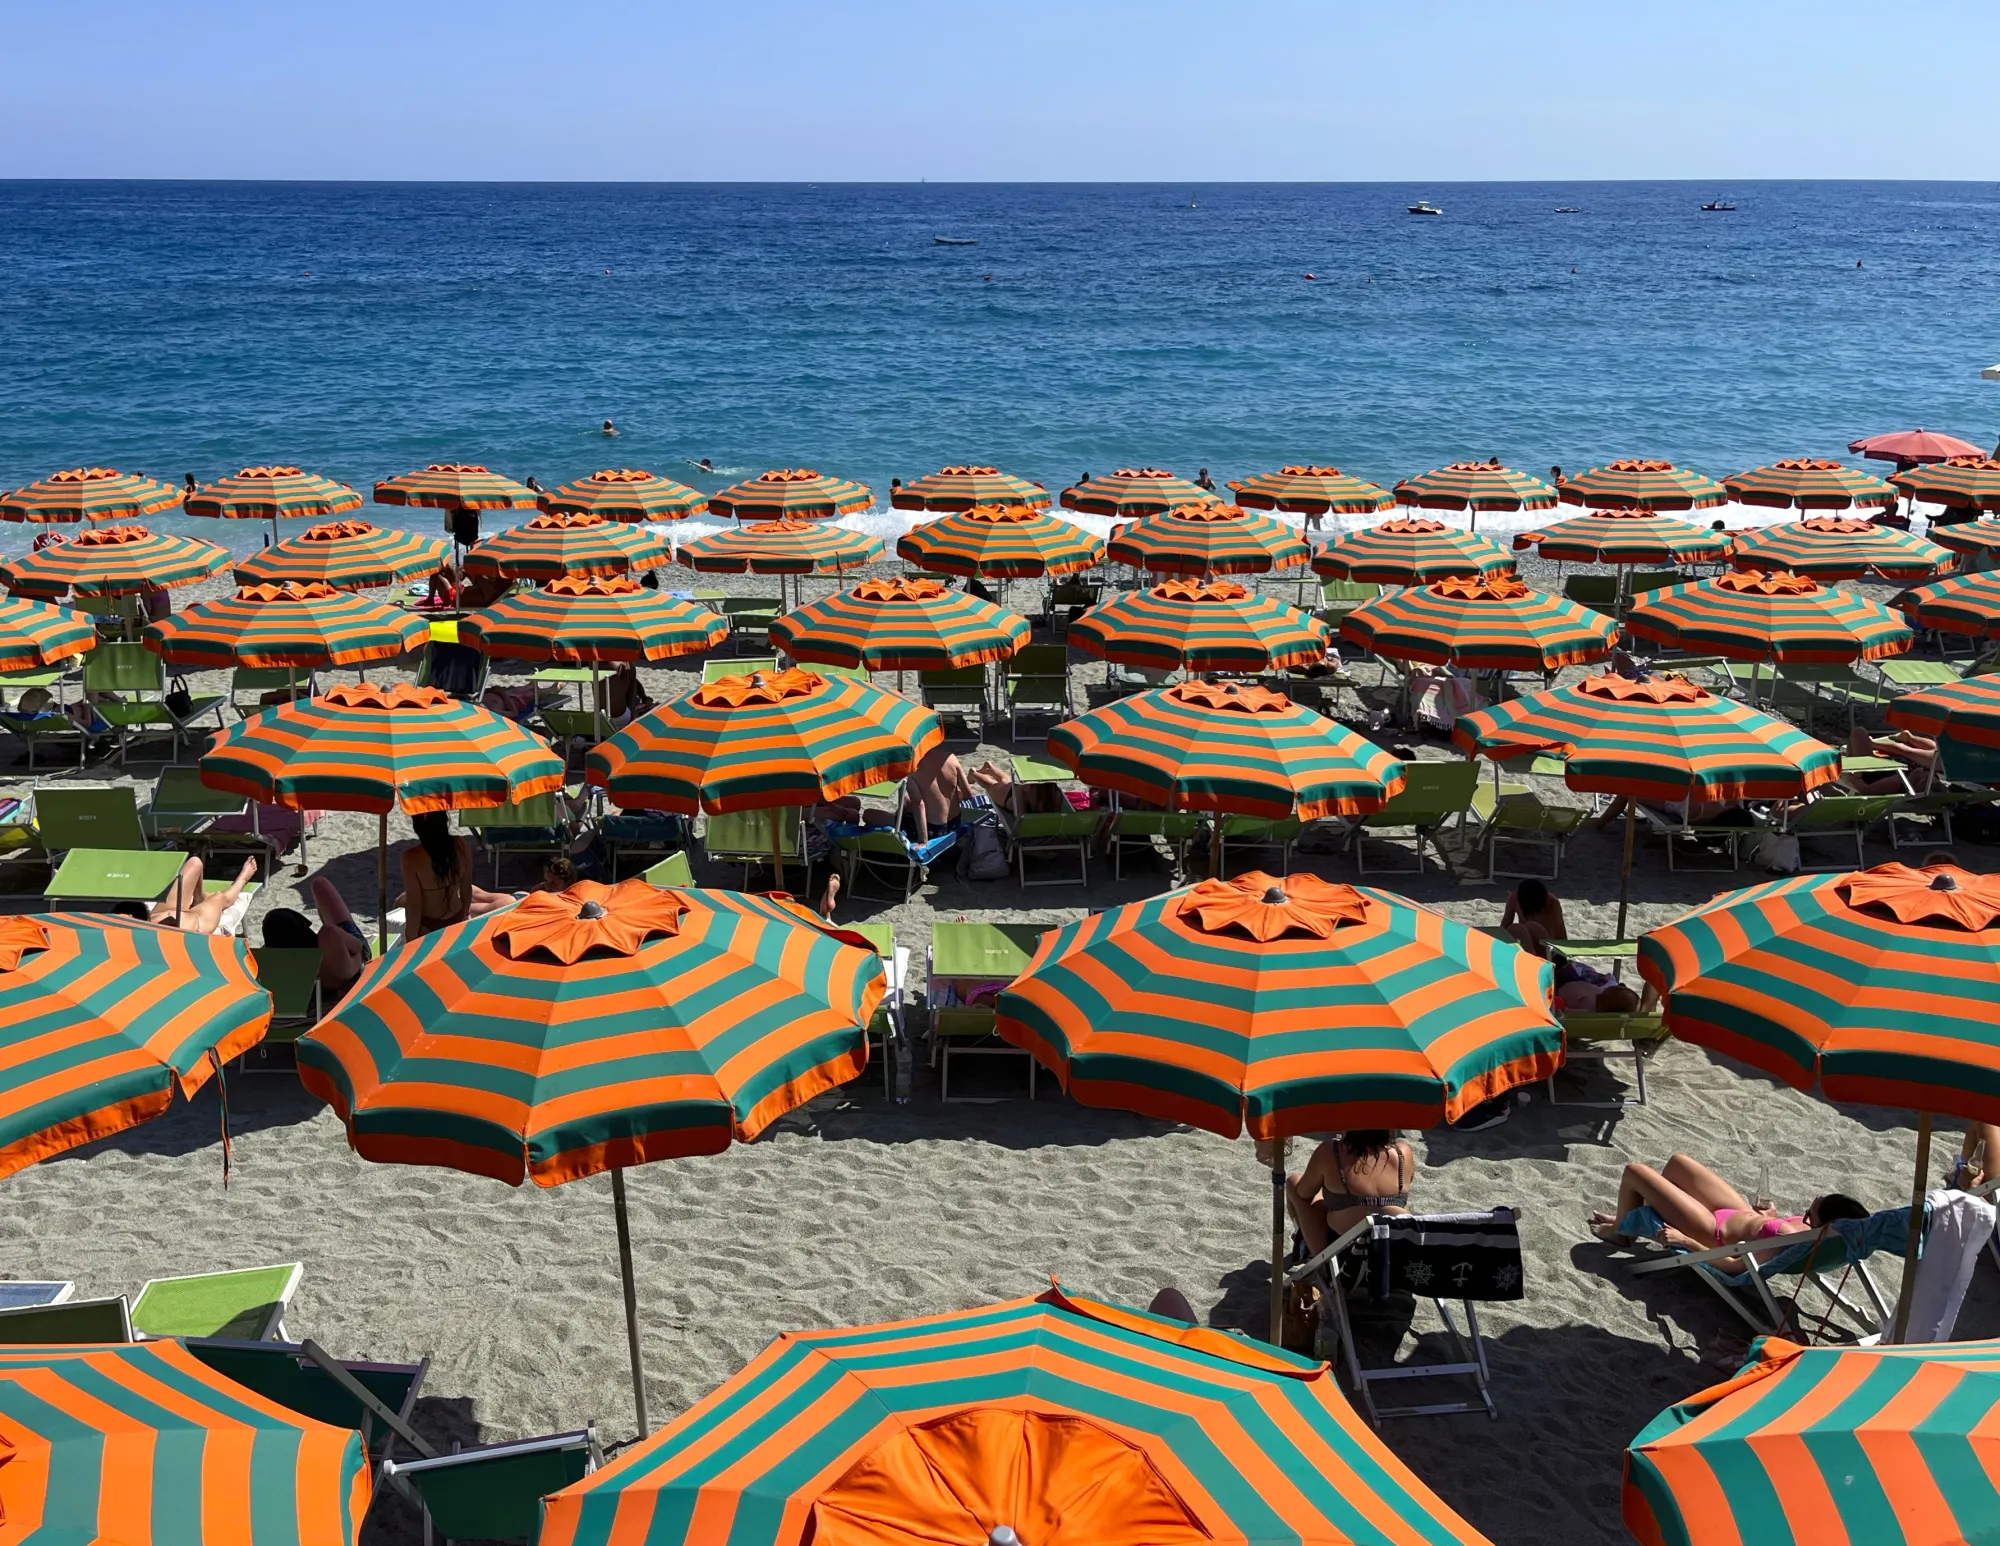 Orange and Green striped umbrellas on the beach